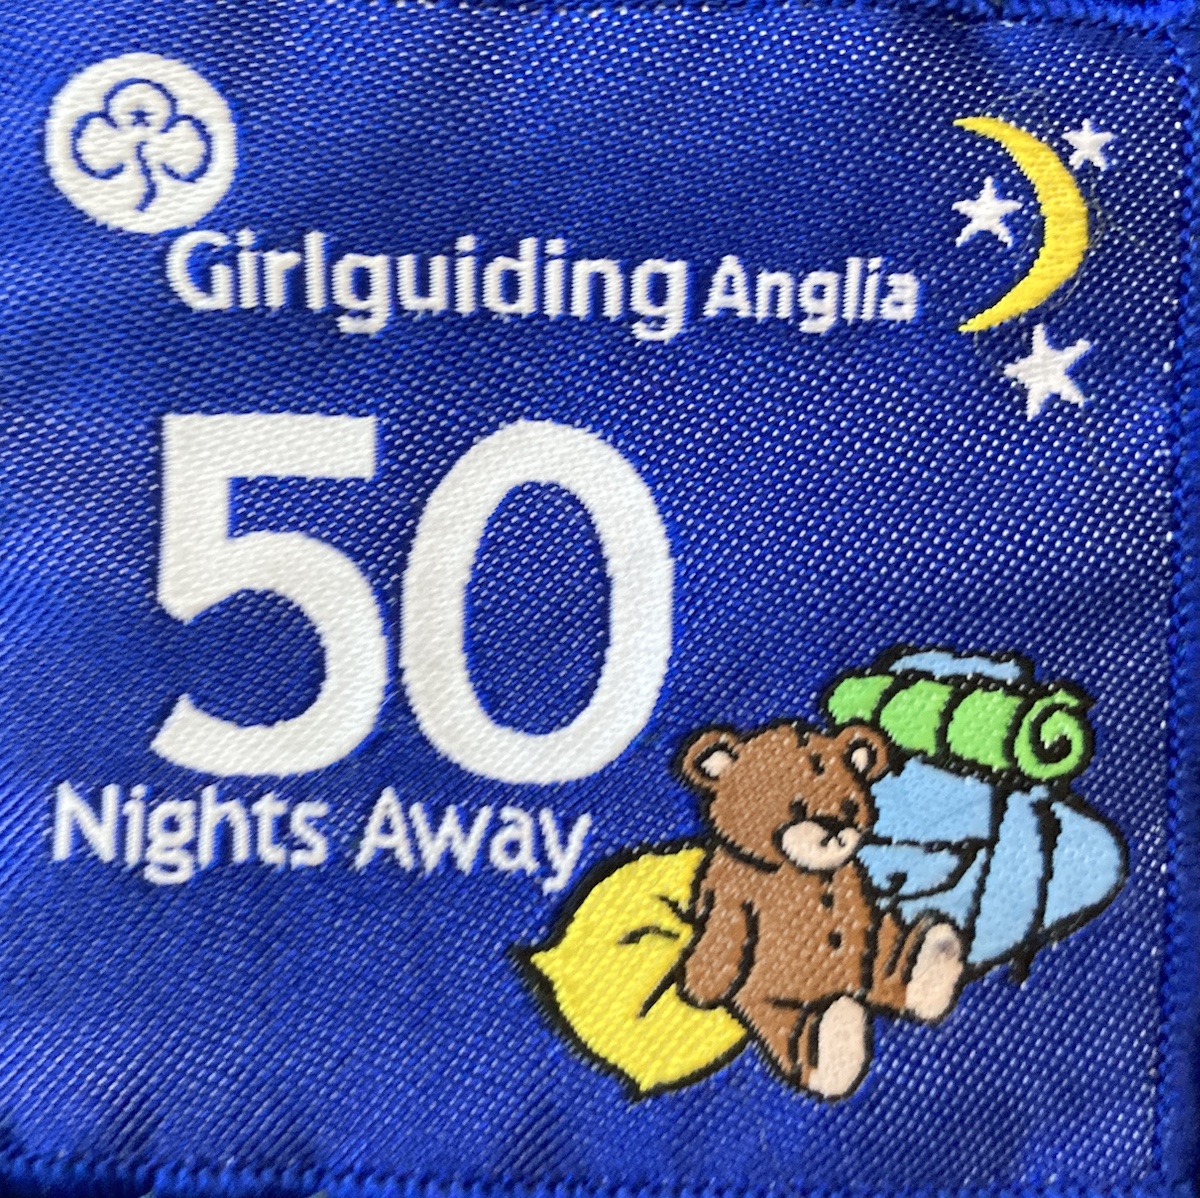 50 Nights Away badge